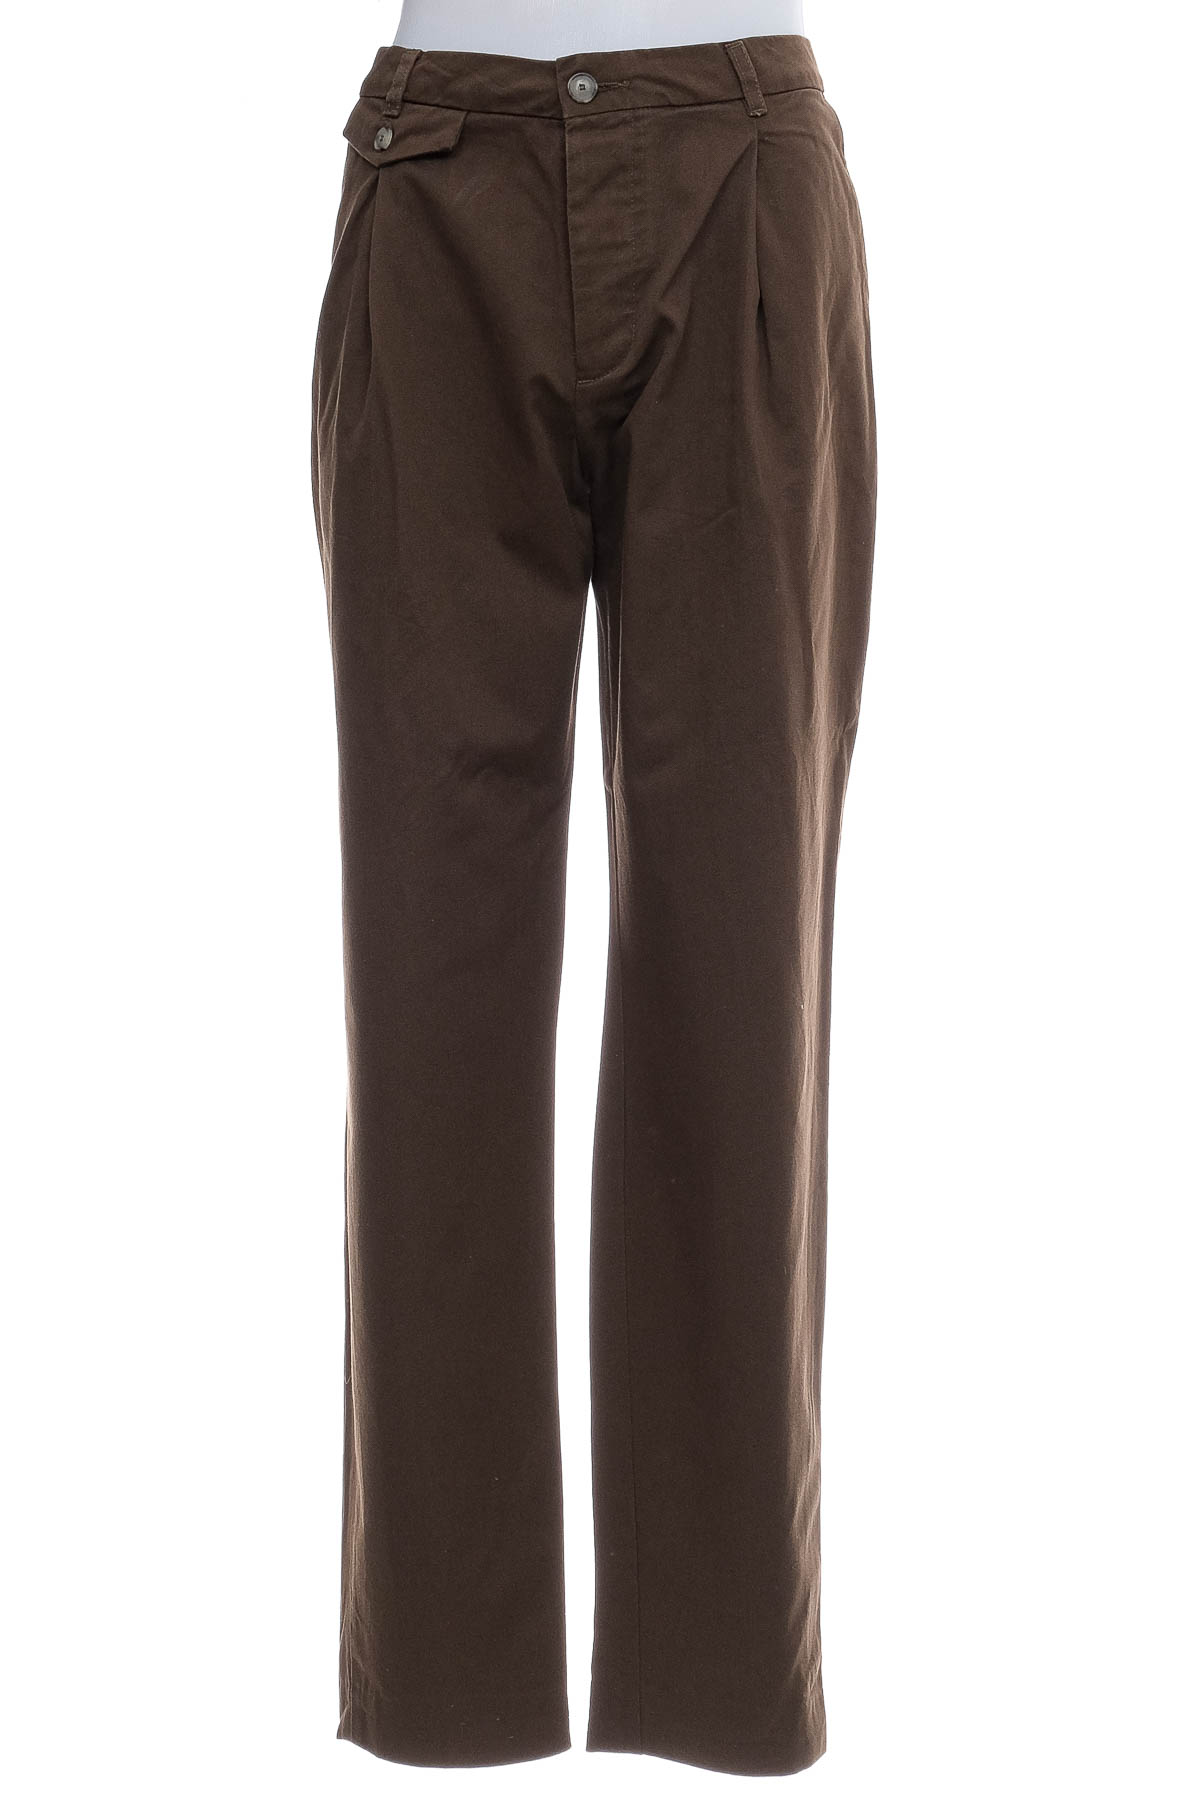 Pantalon pentru bărbați - American Vintage - 0